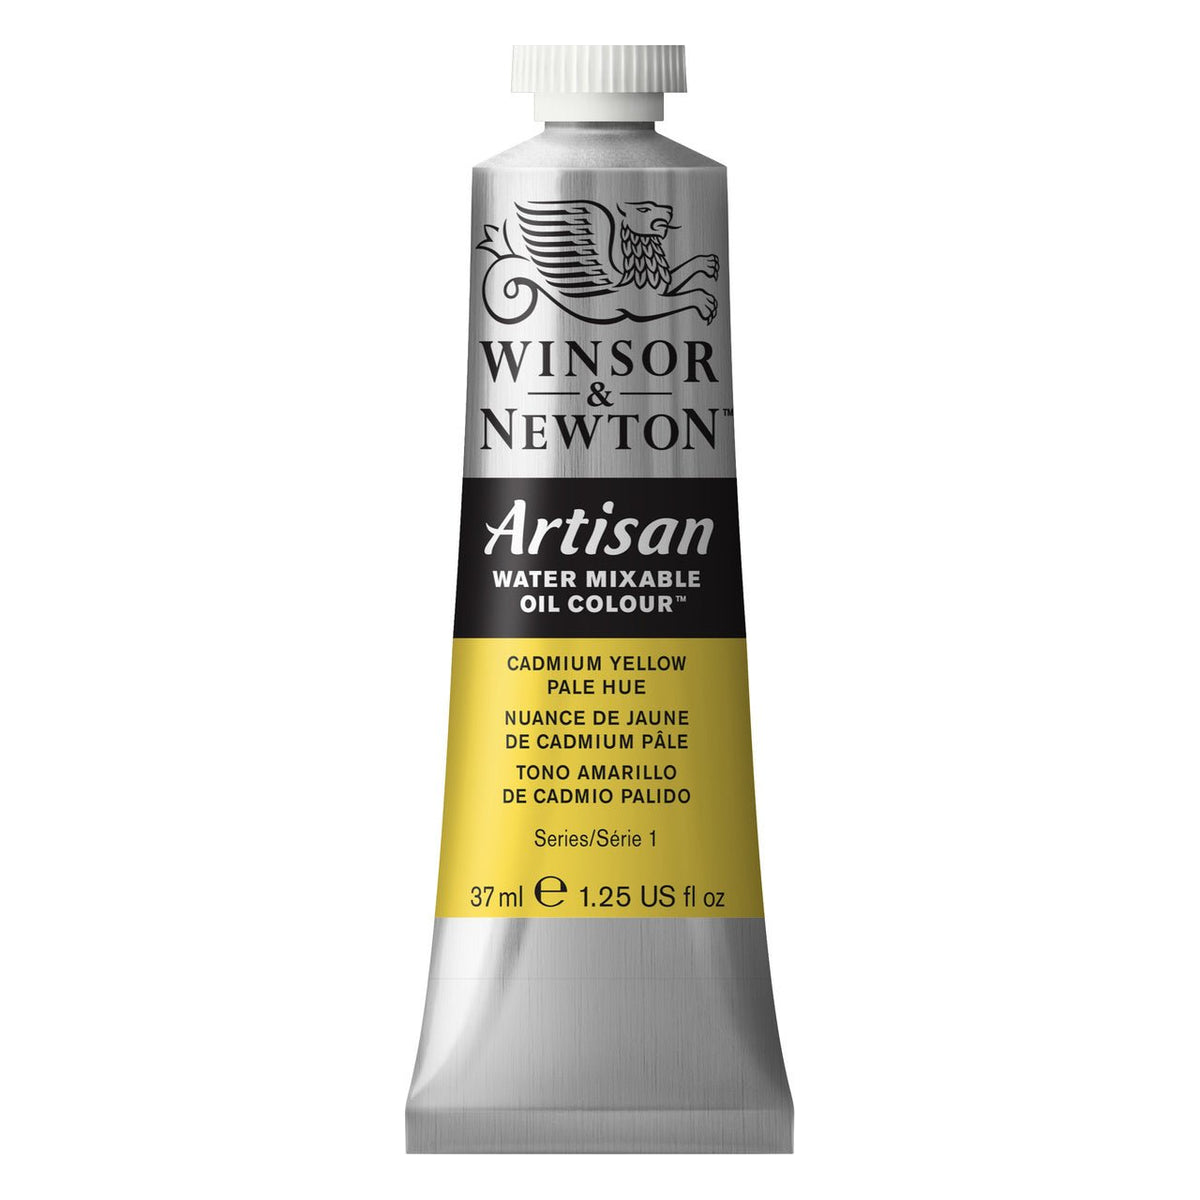 Winsor & Newton Artisan Water Mixable Oil 37ml - Cadmium Yellow Pale Hue - merriartist.com